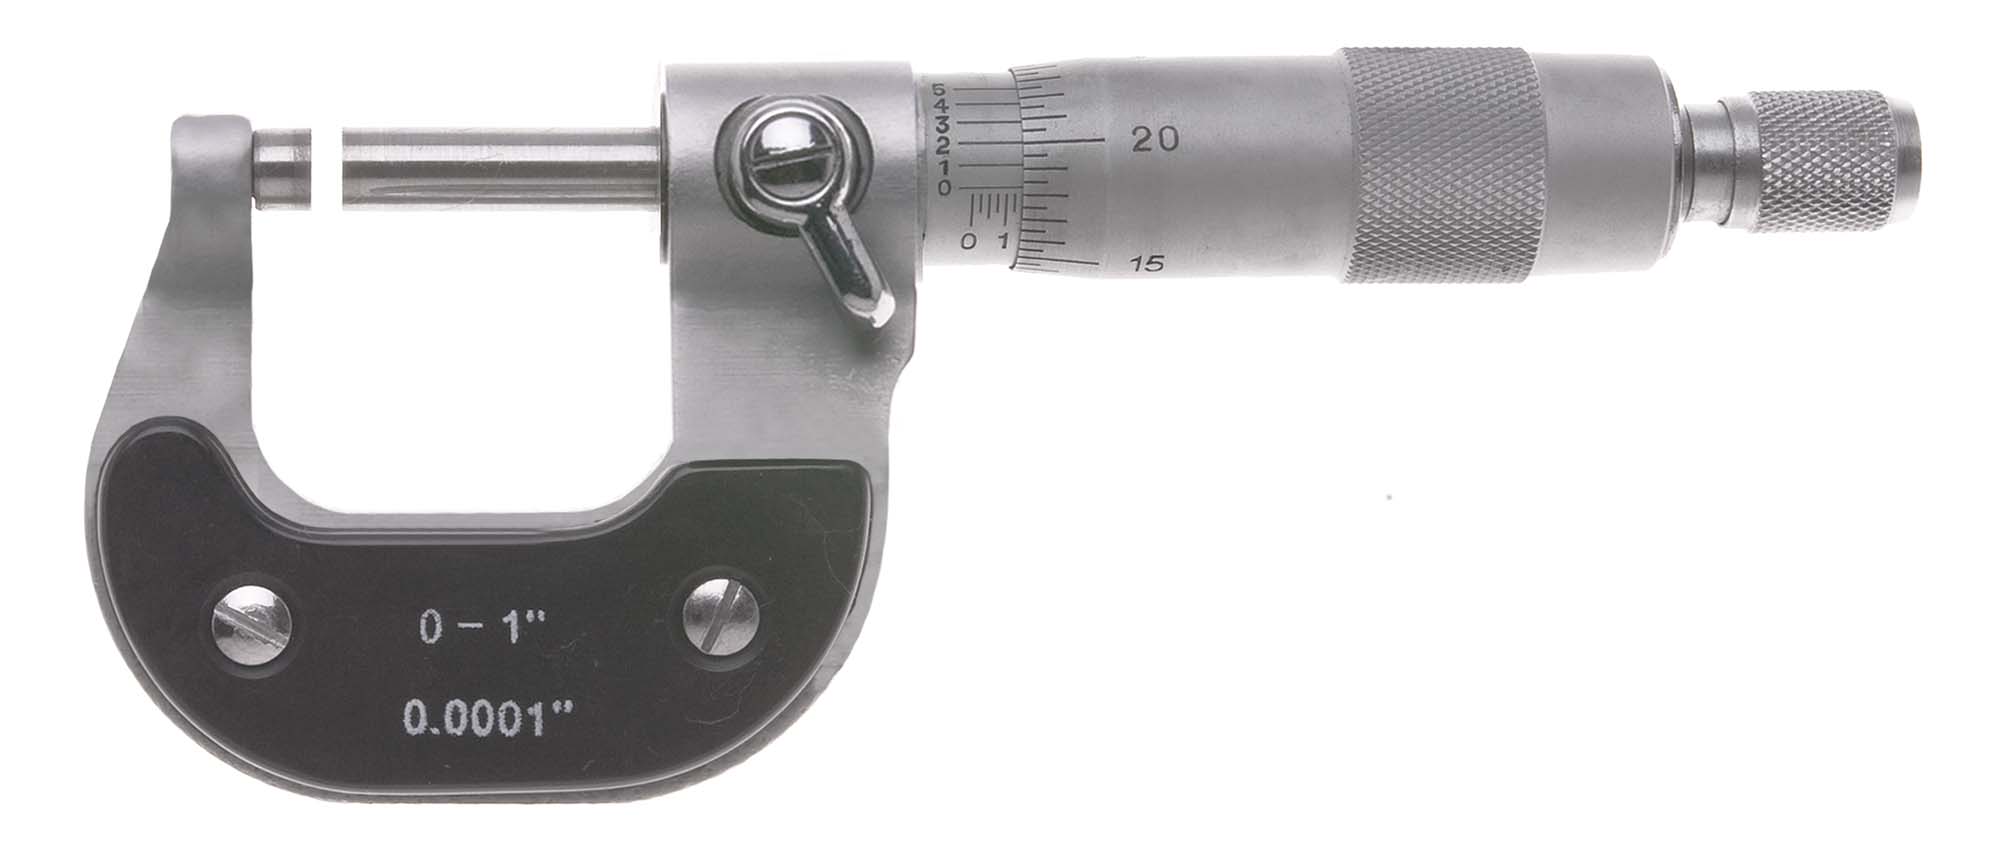 VME-02  1-2" VME Outside Micrometer, .0001"